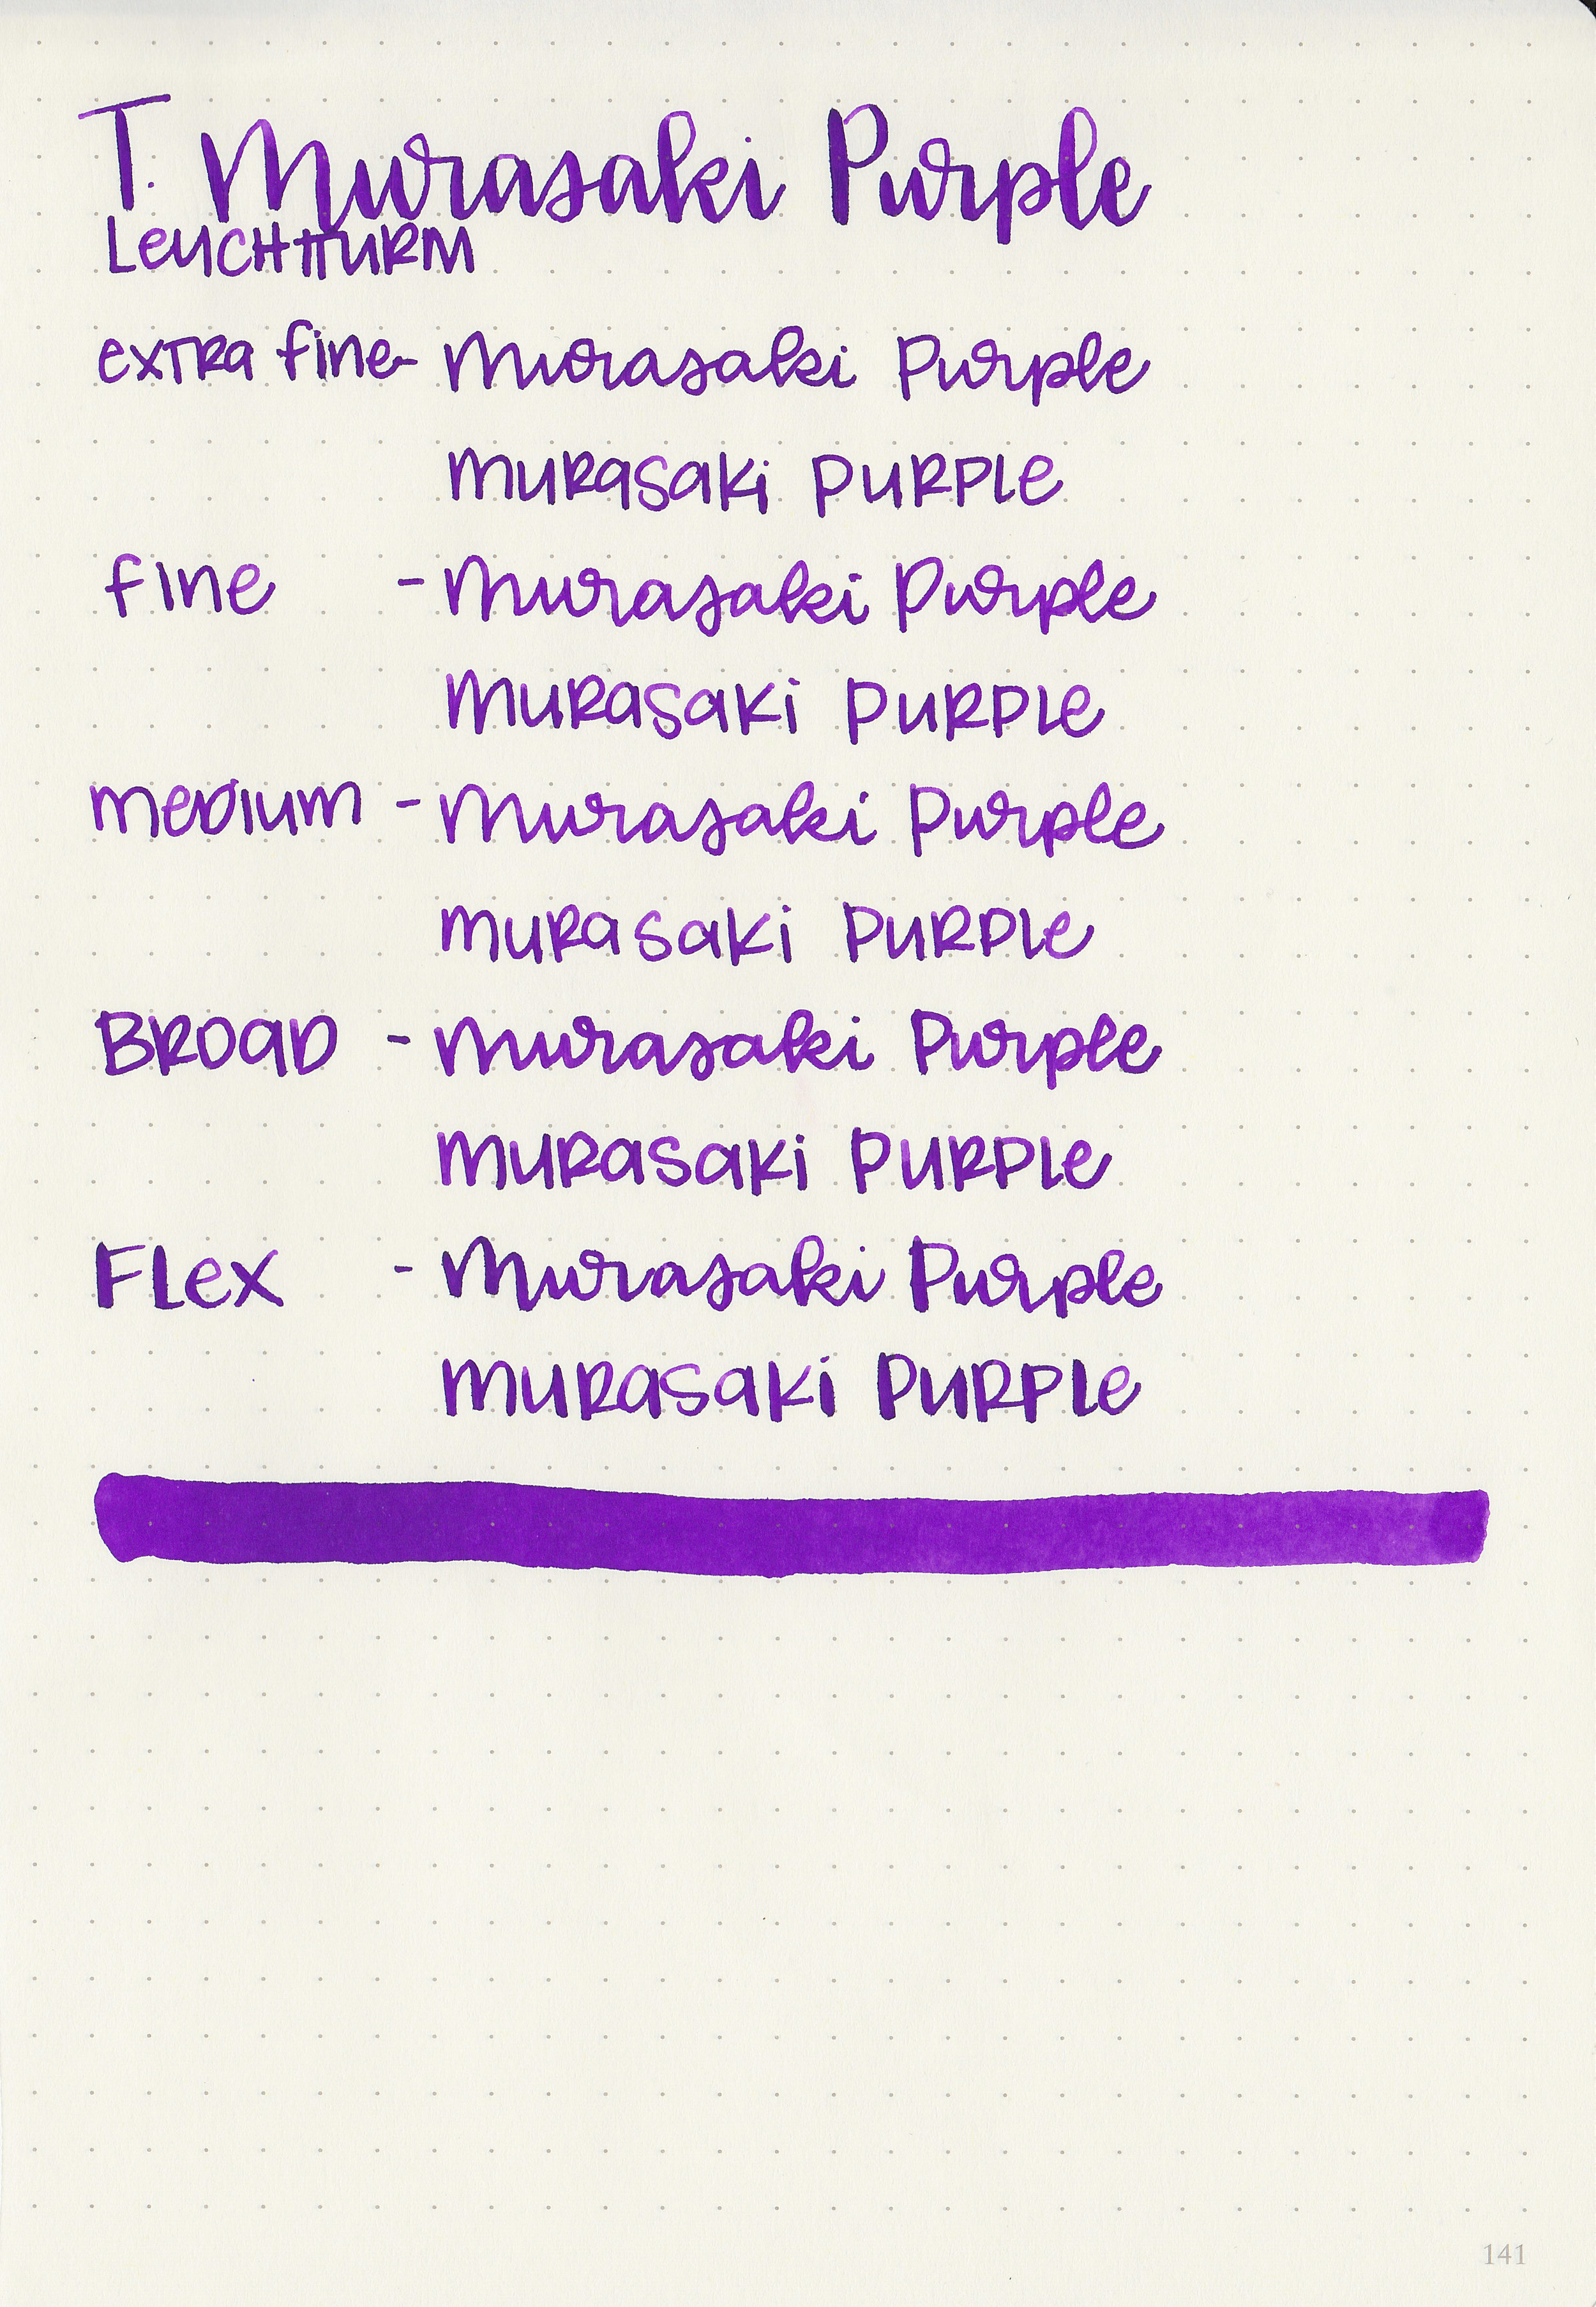 tac-murasaki-purple-11.jpg